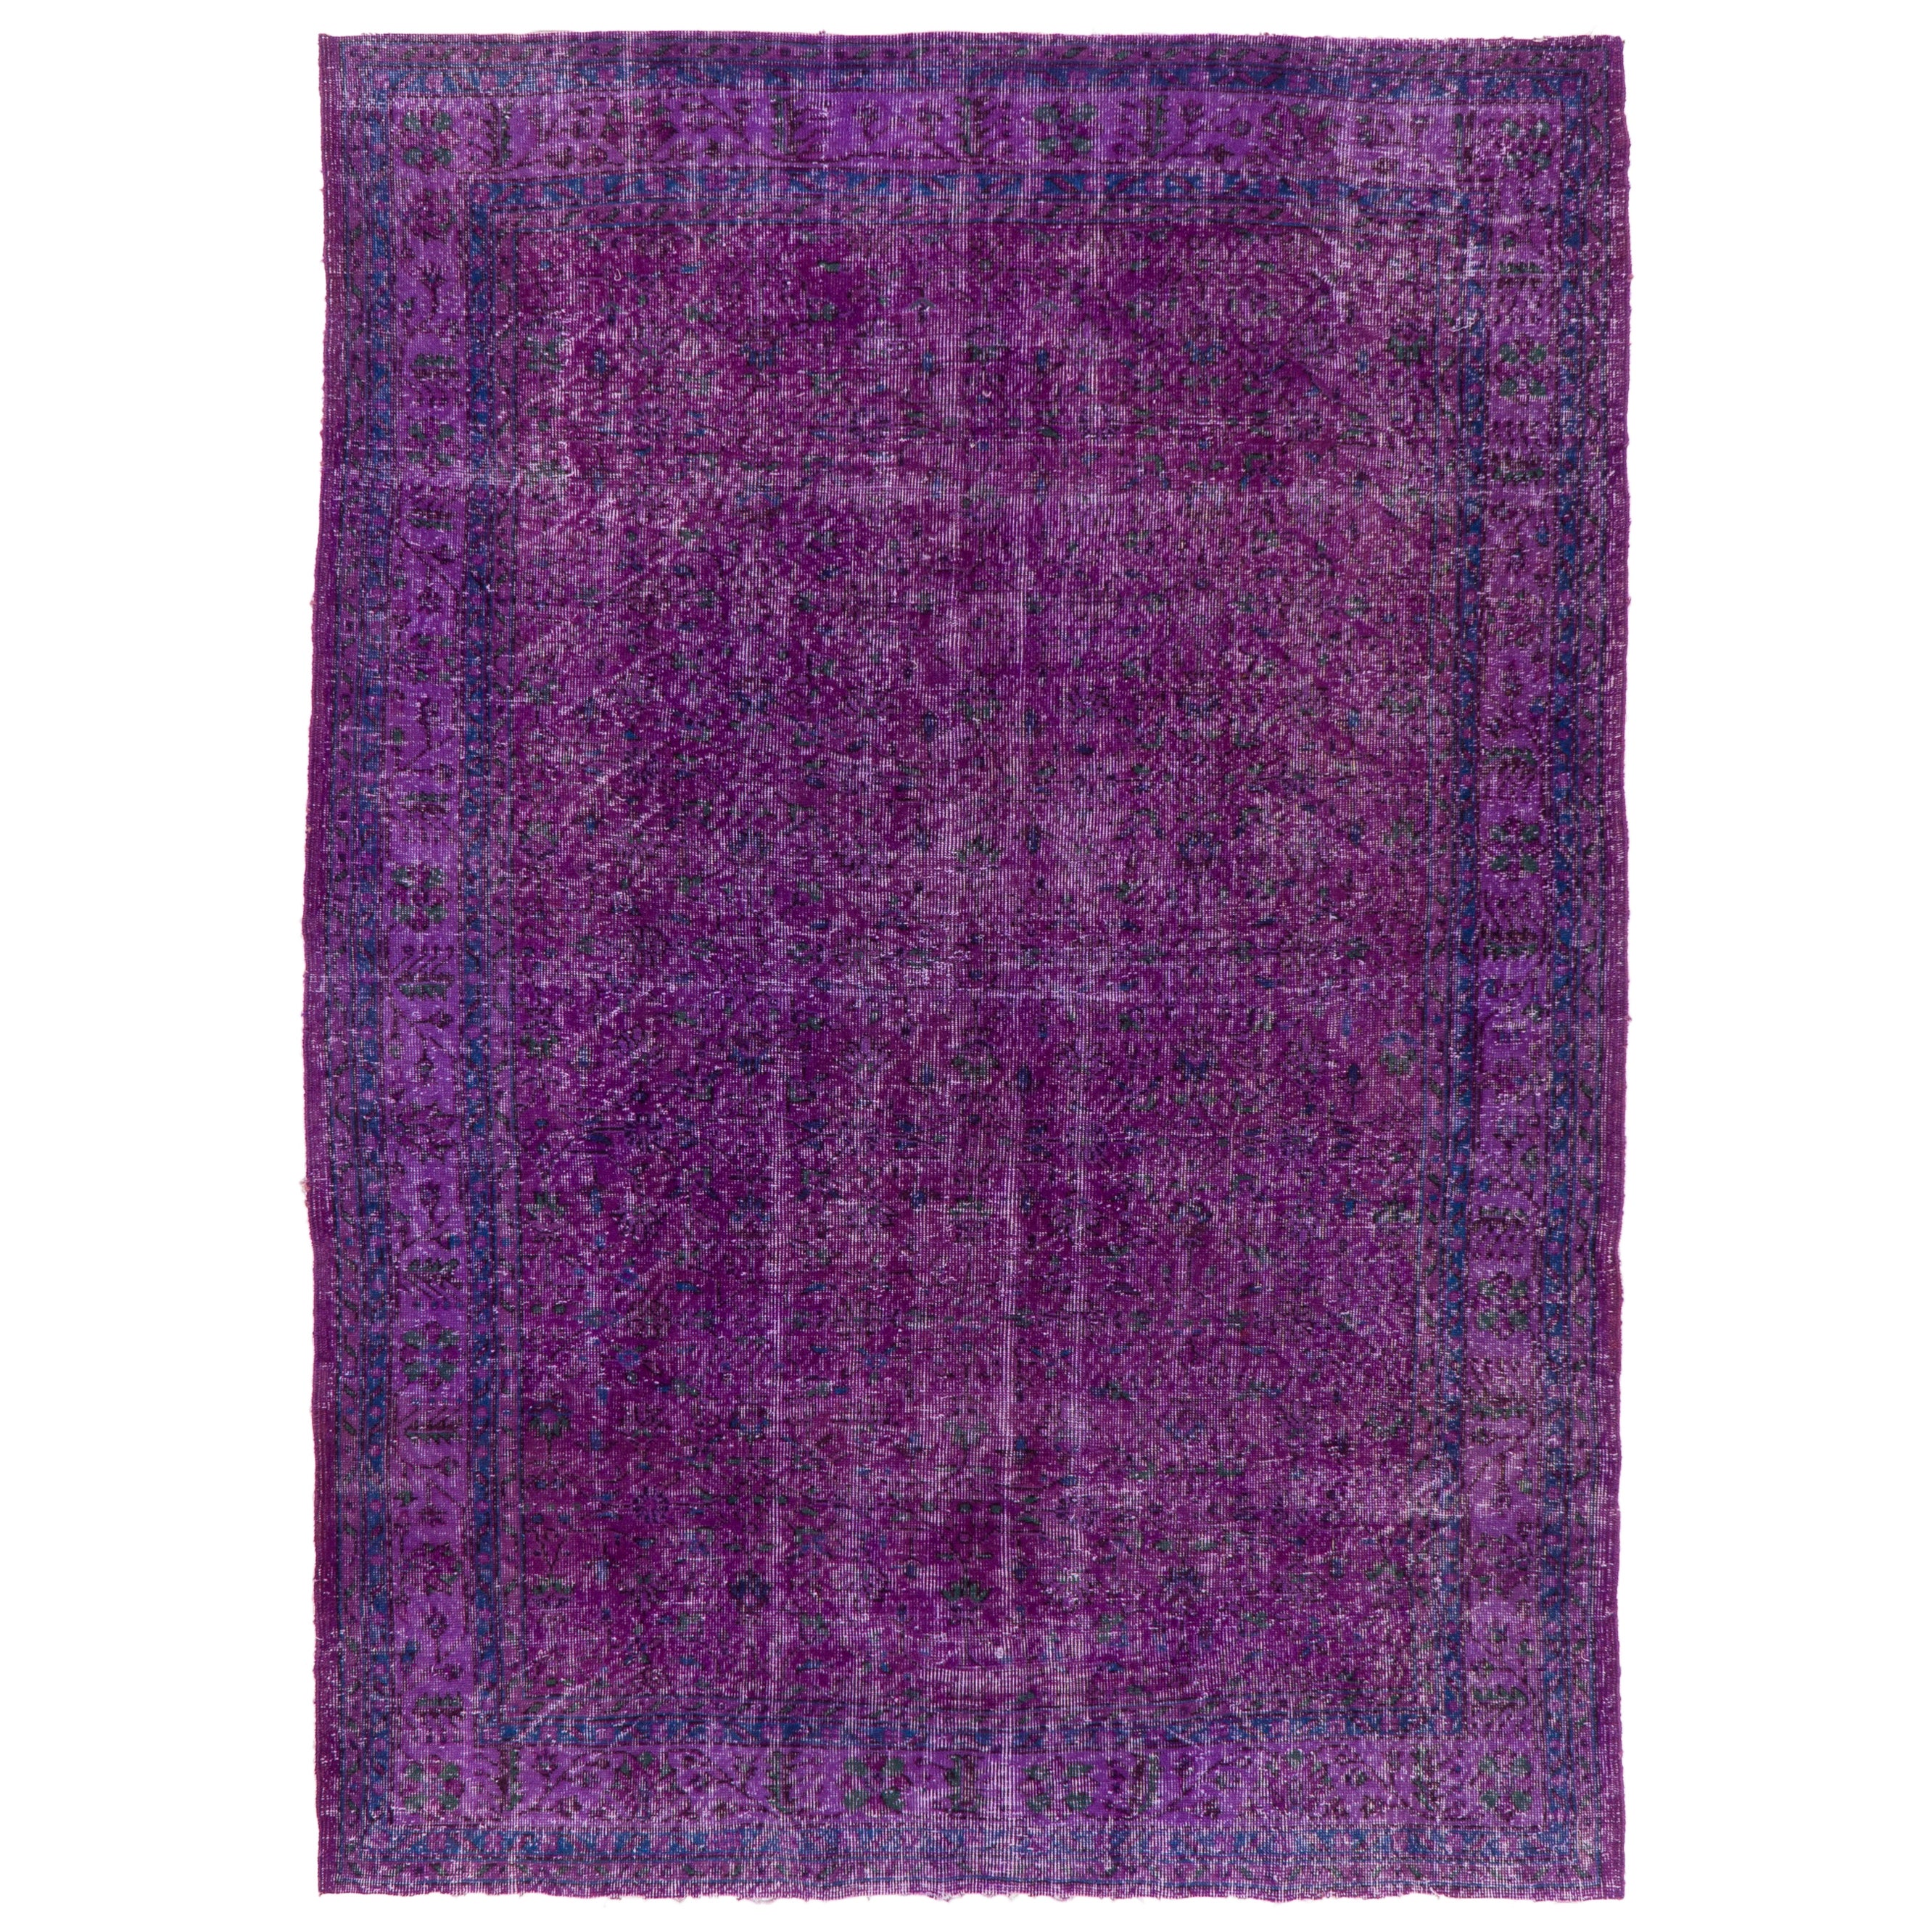 6.5x9.4 Ft Handmade Turkish Wool Rug, Home Decor Purple Carpet, Floor Covering